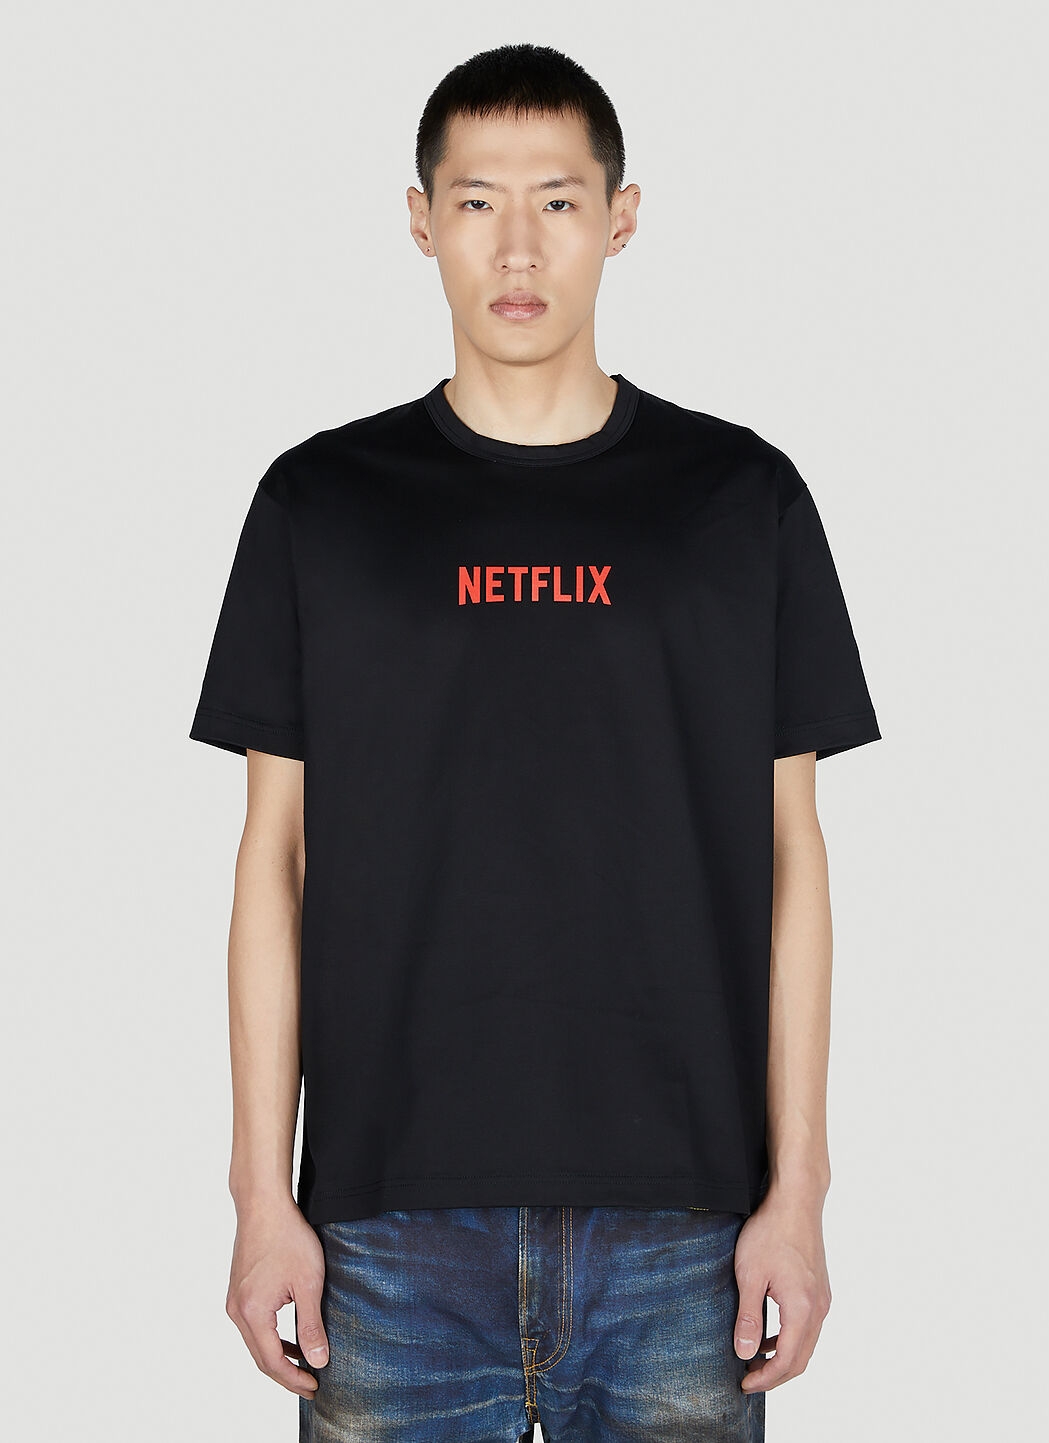 Junya Watanabe x Oakley Netflix T-Shirt Black jwo0154001